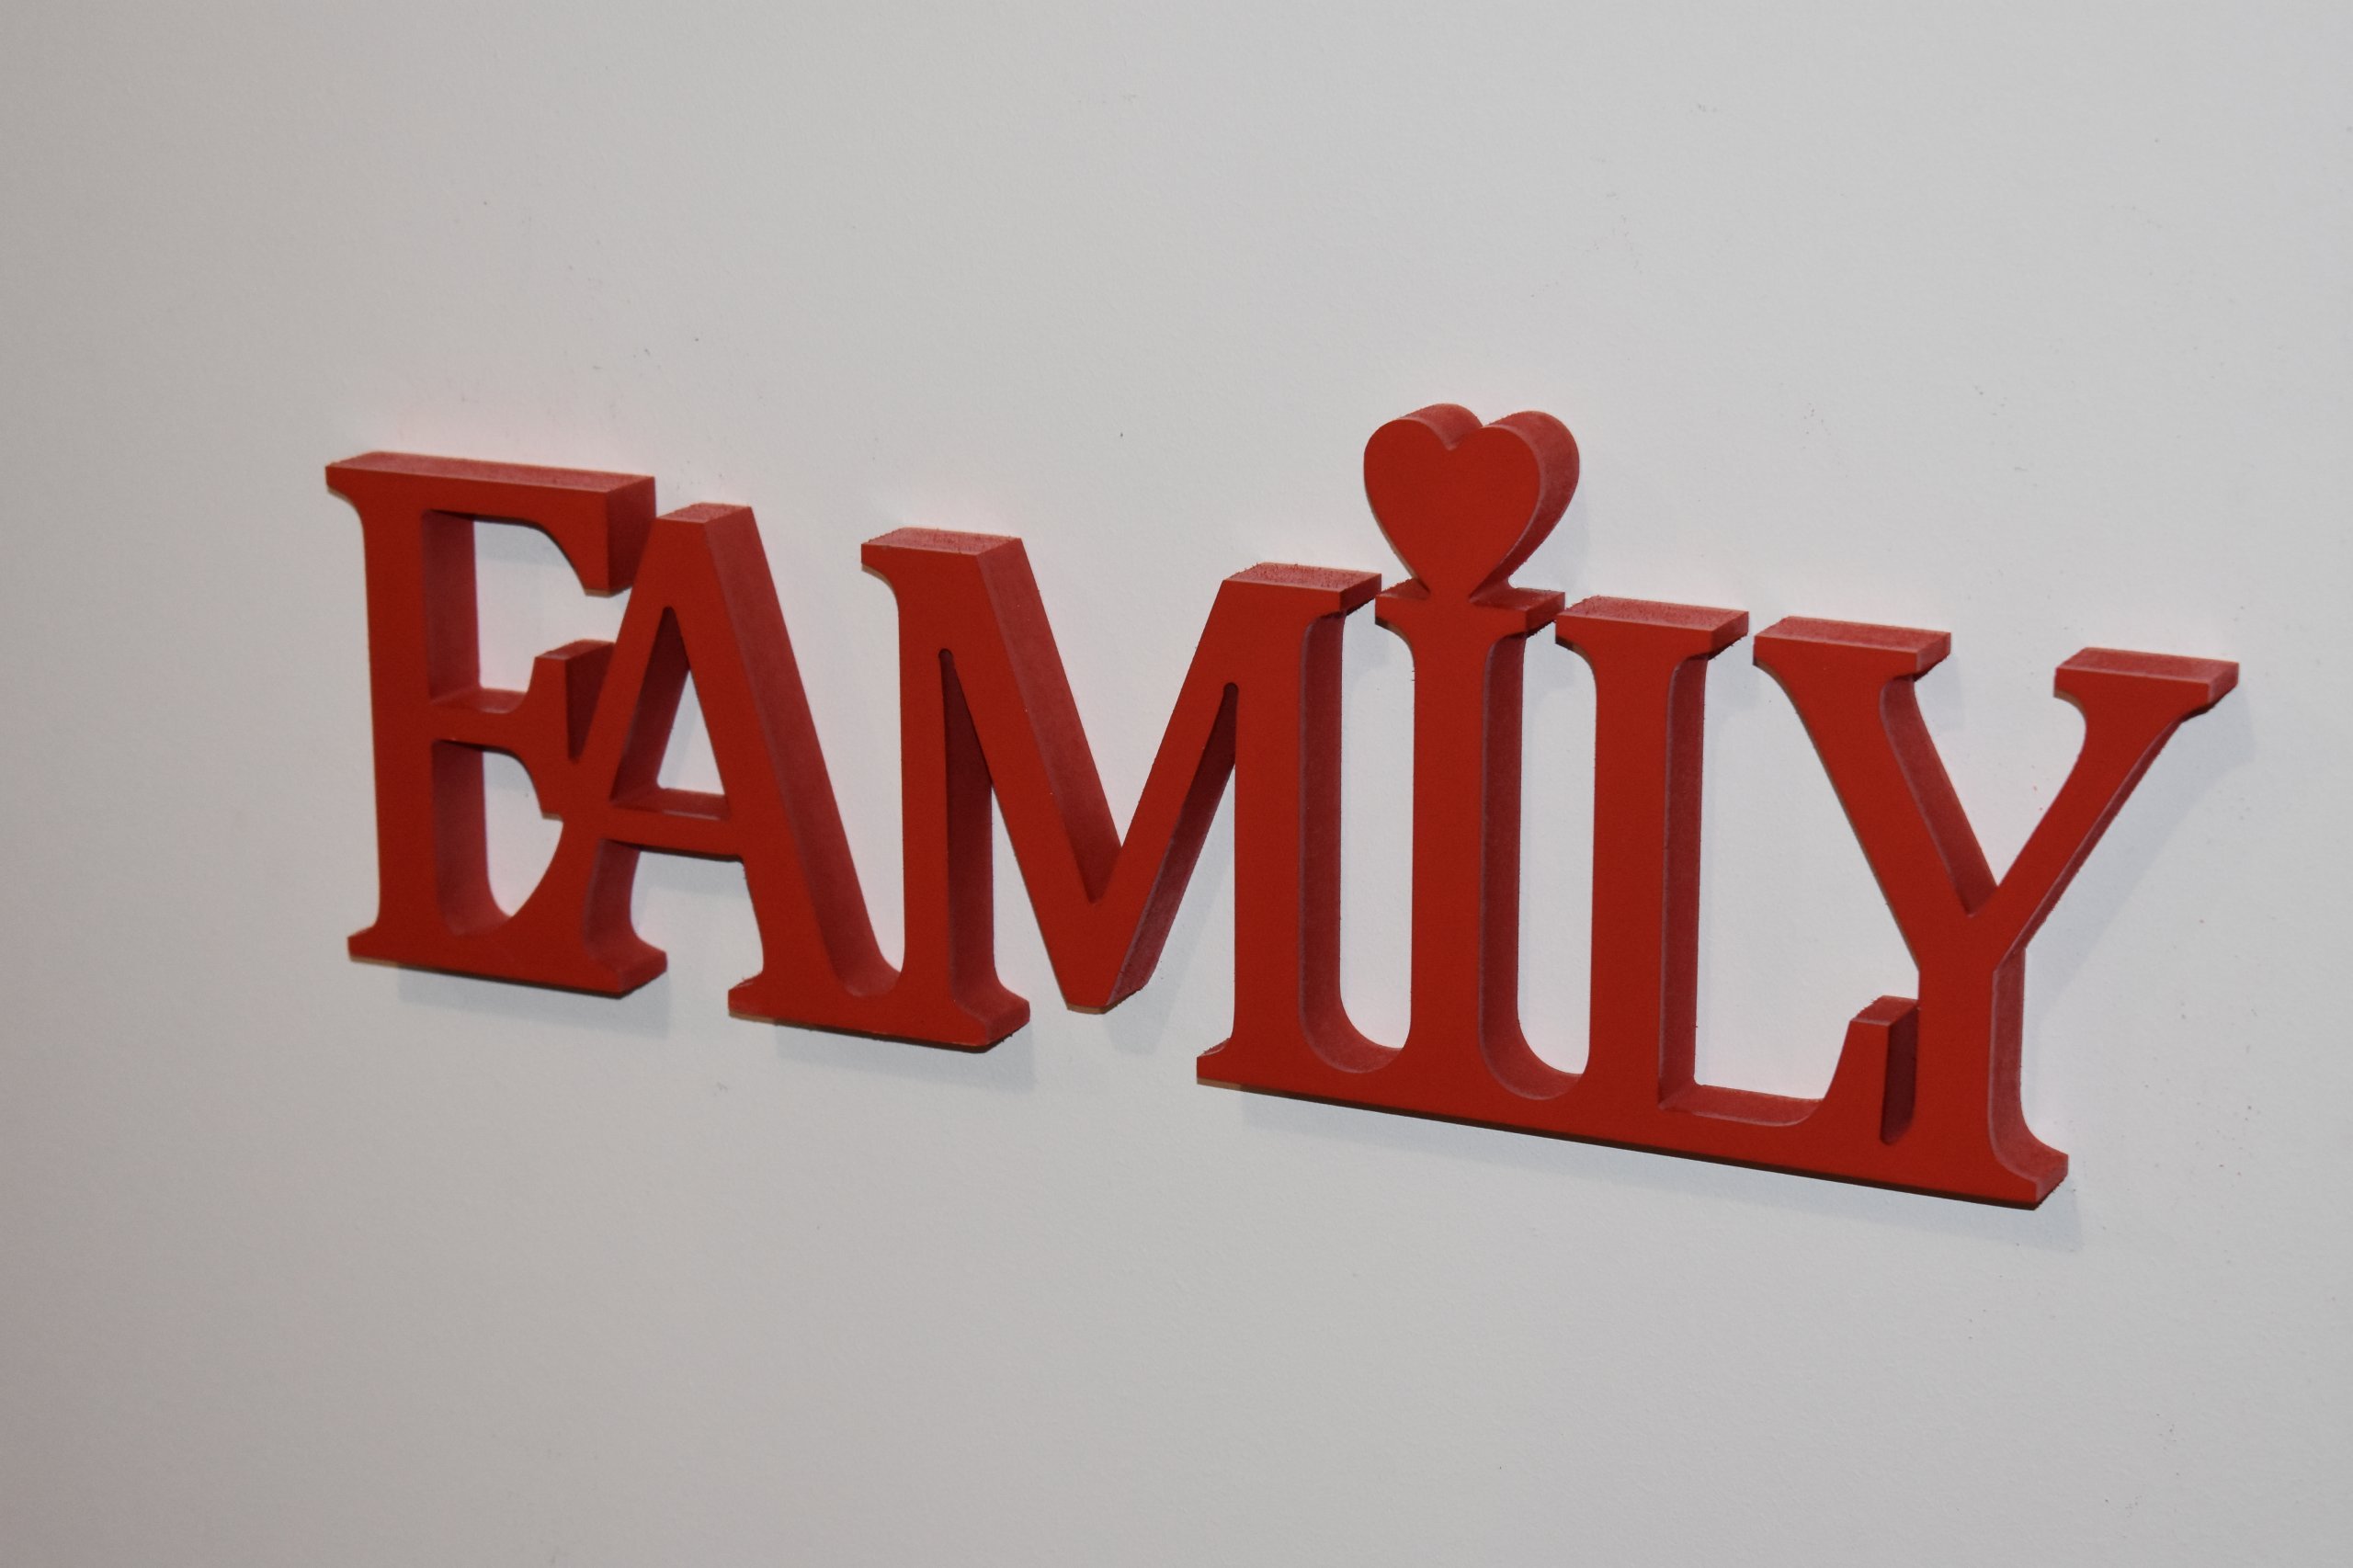 My family shop. Family надпись. Family надпись красивая. Май Фэмили. Май Фэмили красивая надпись.